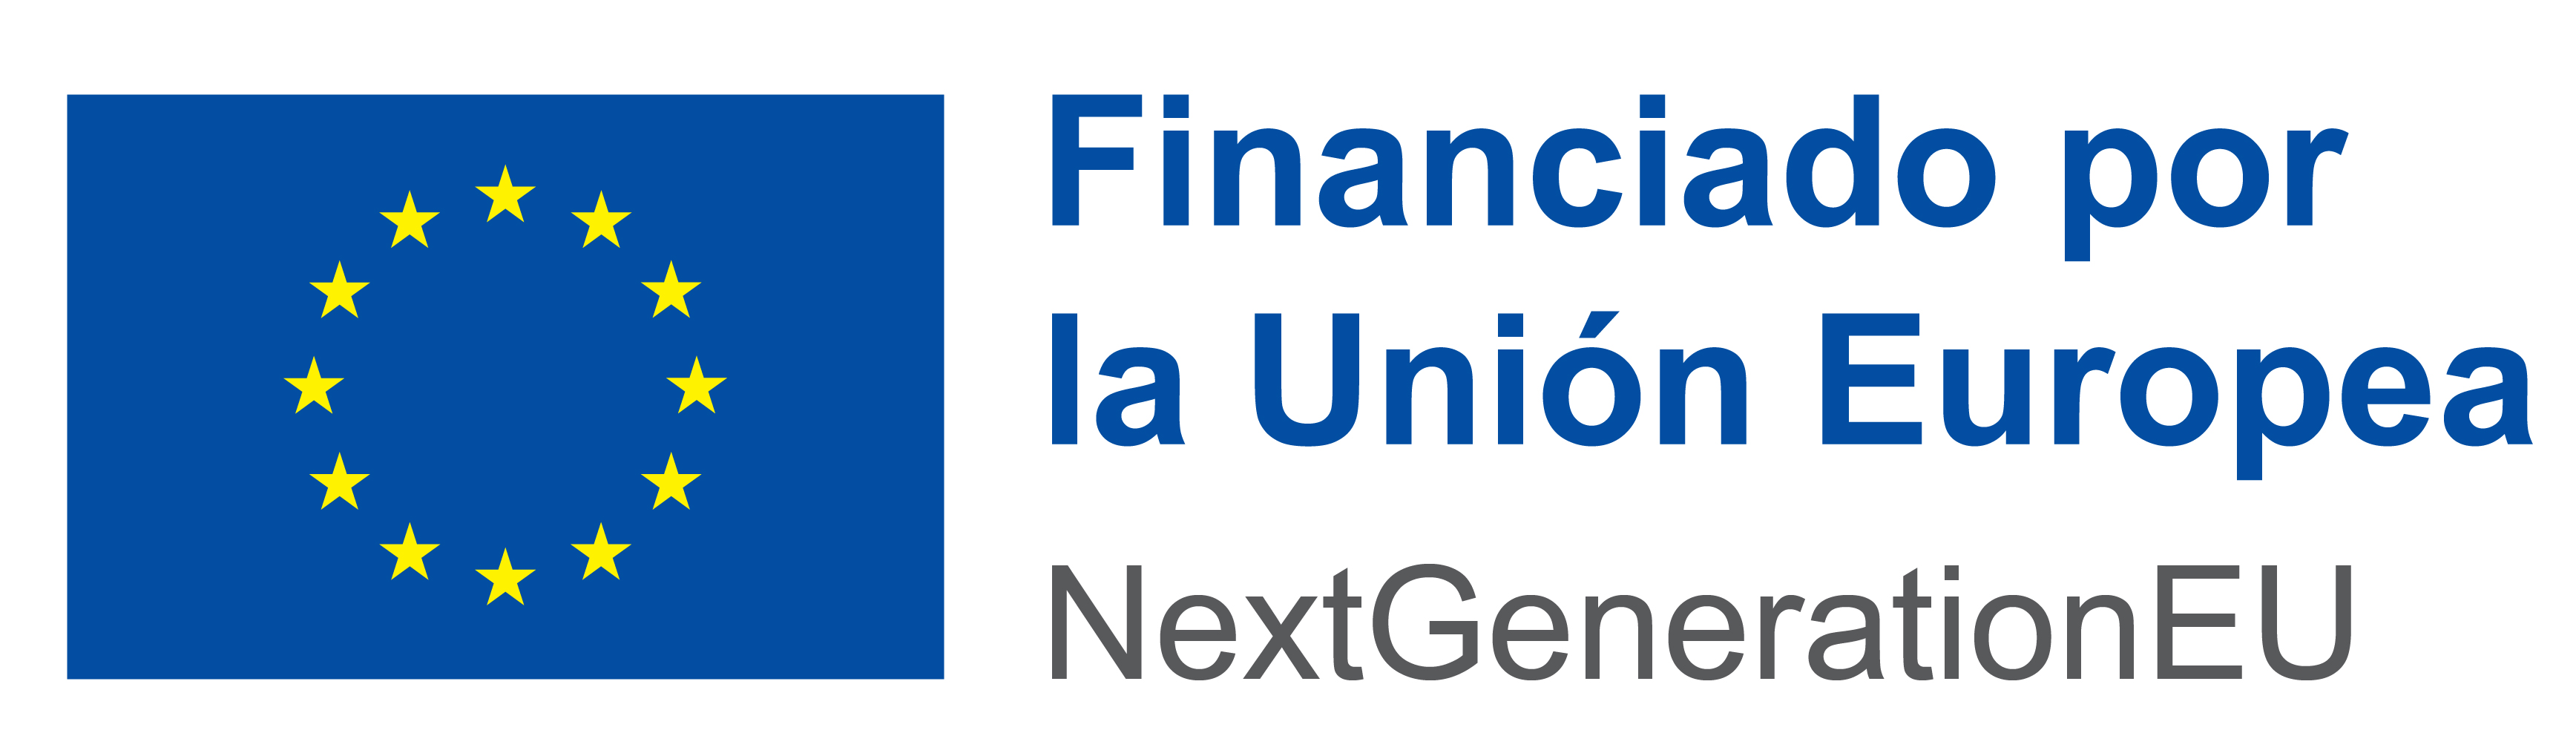 UE. Fondo Next Generation